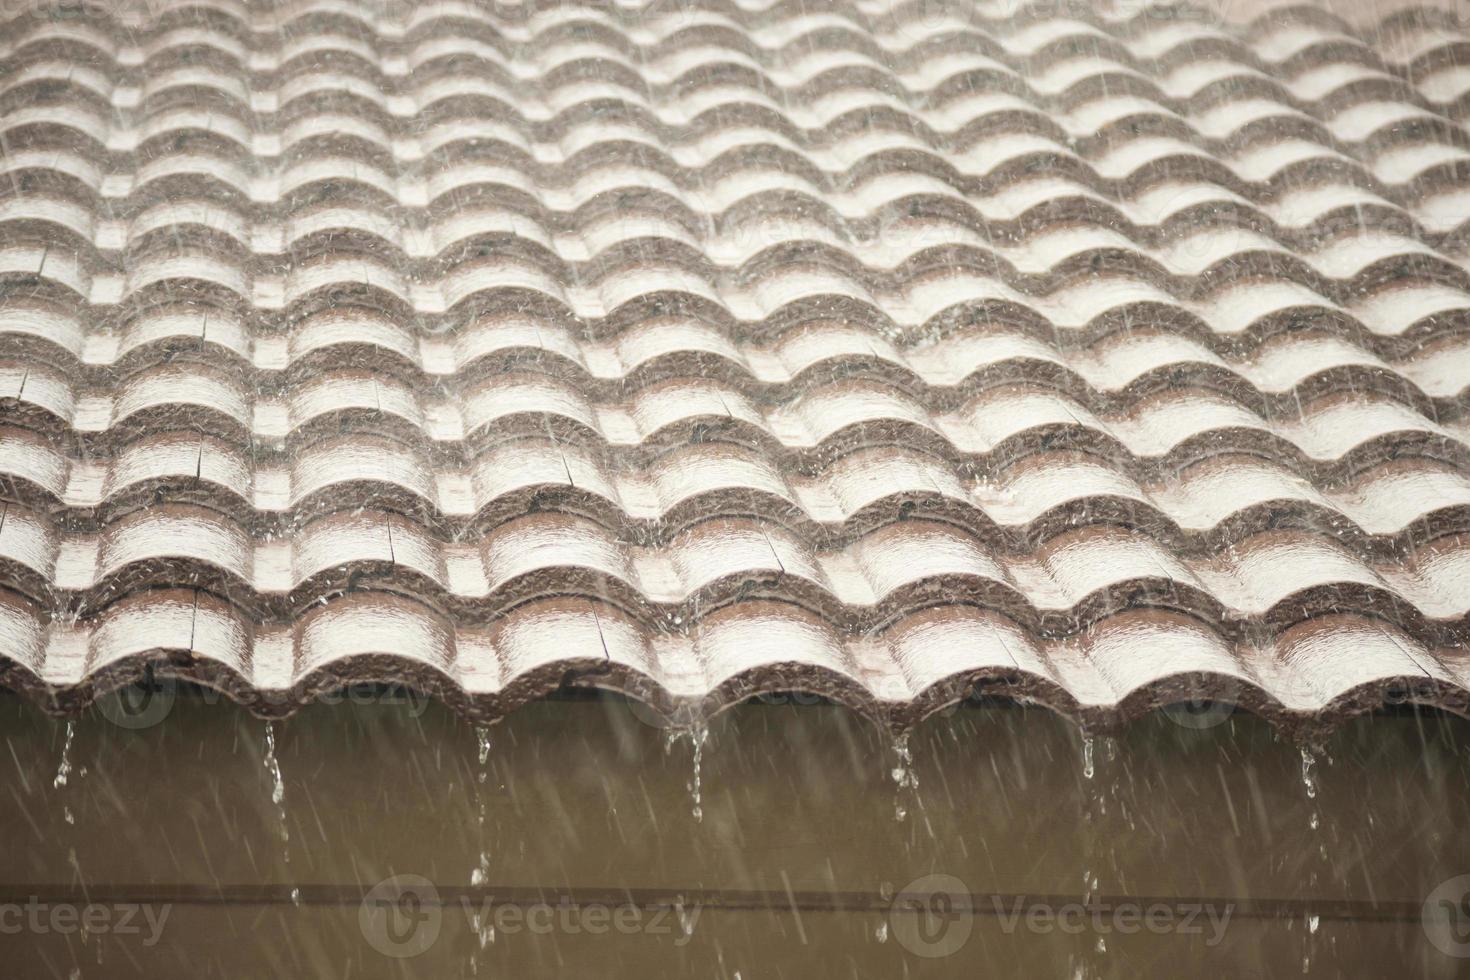 regn faller ner från de hus tak foto